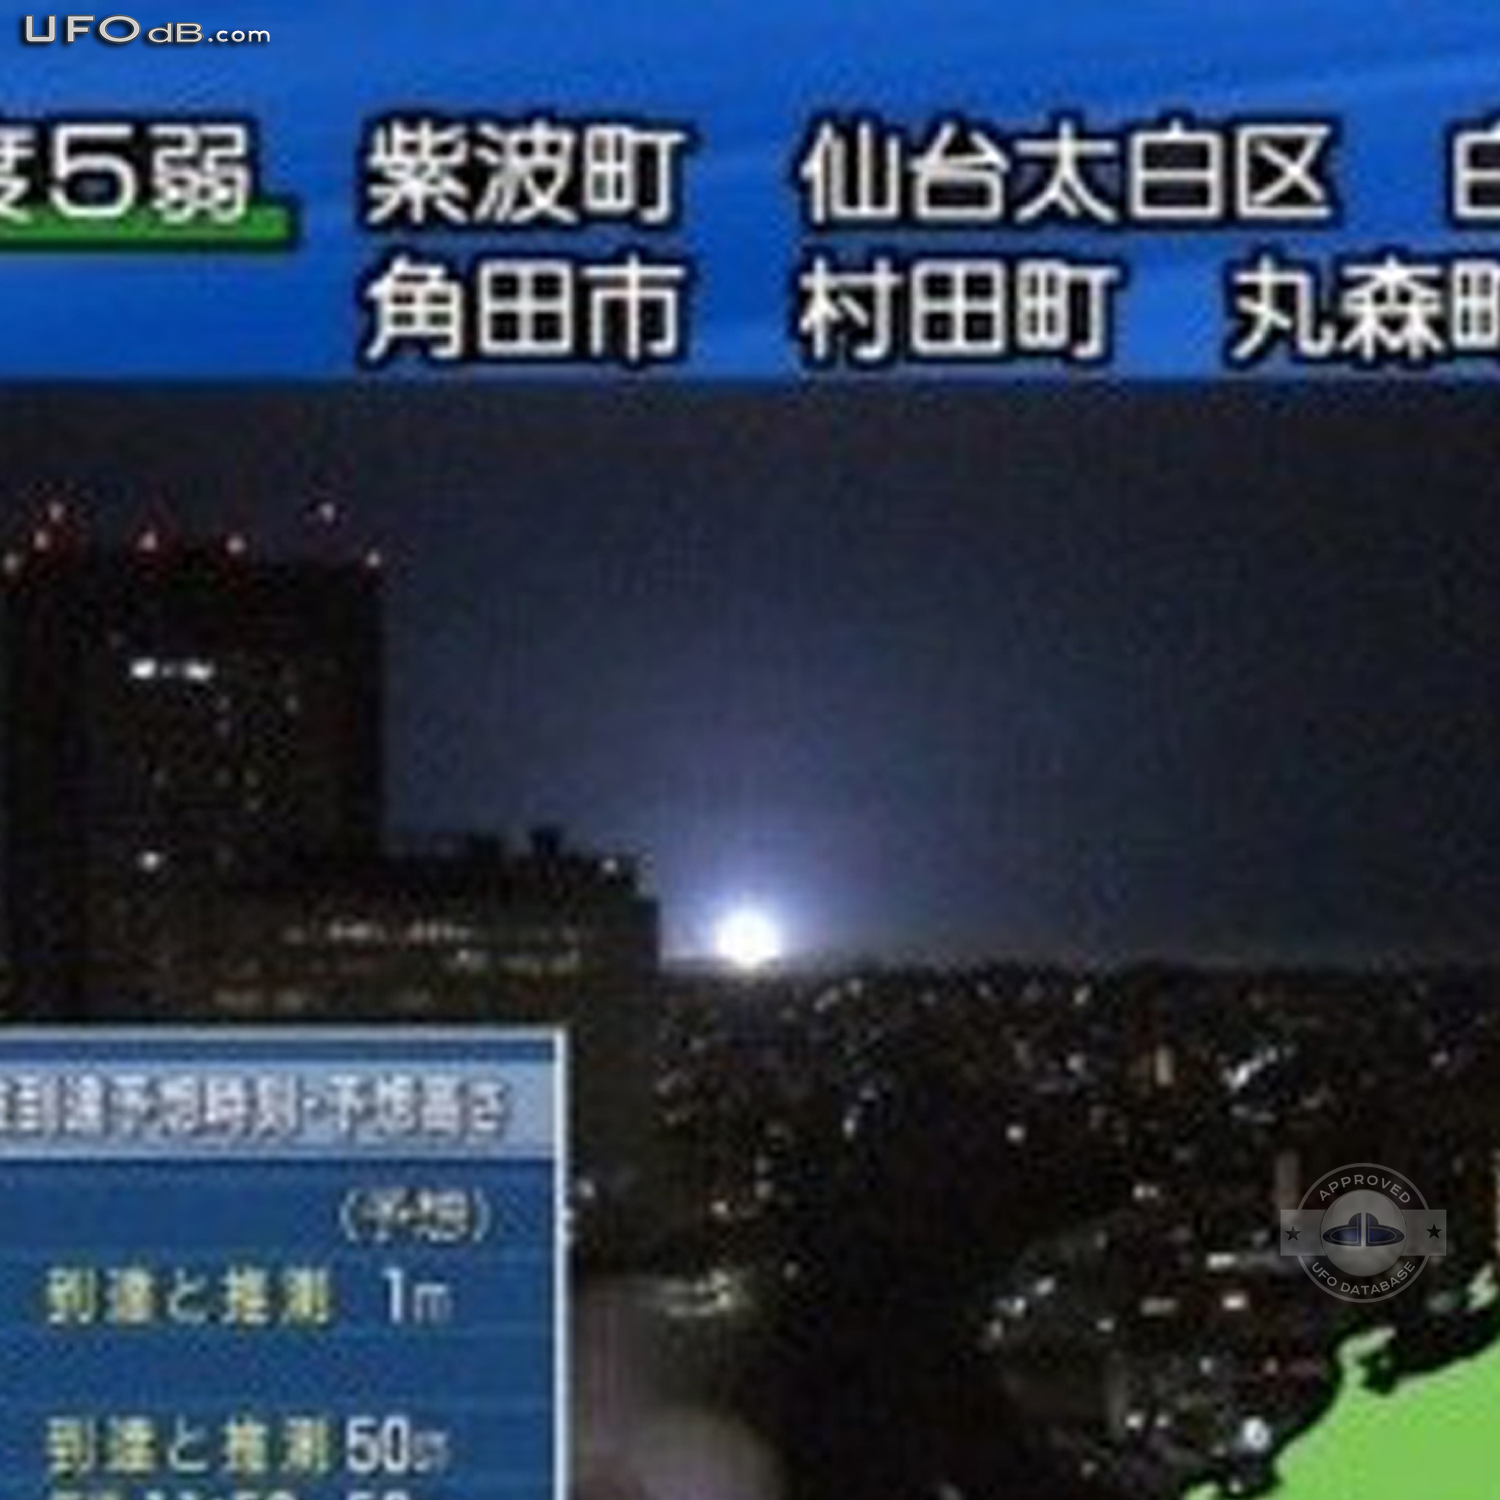 NHK TV News show earthquake strange UFO light | Japan | April 7 2011 UFO Picture #293-3